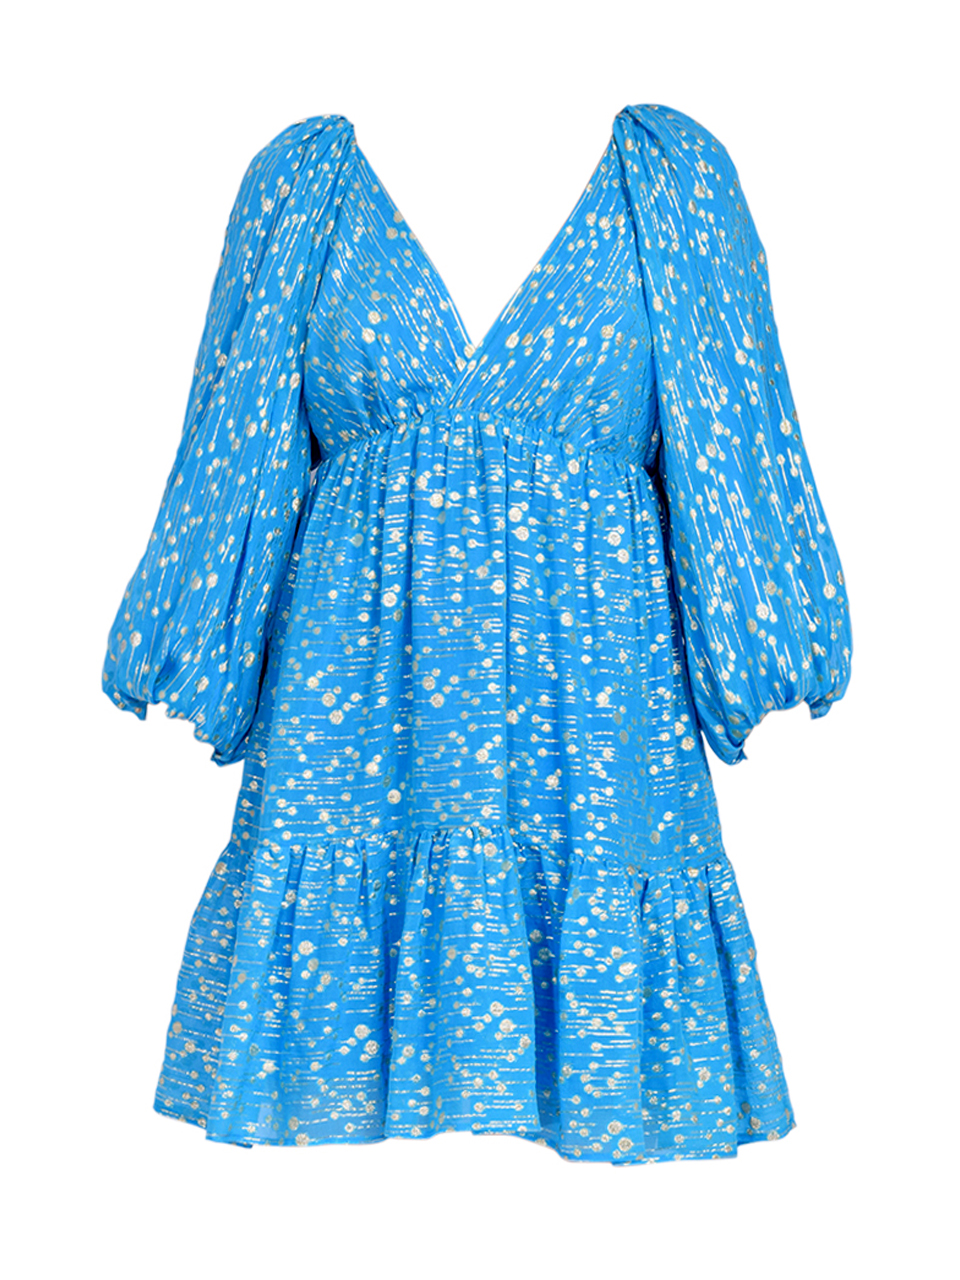 DELFI Roxy Mini Dress in Blue Product Shot 